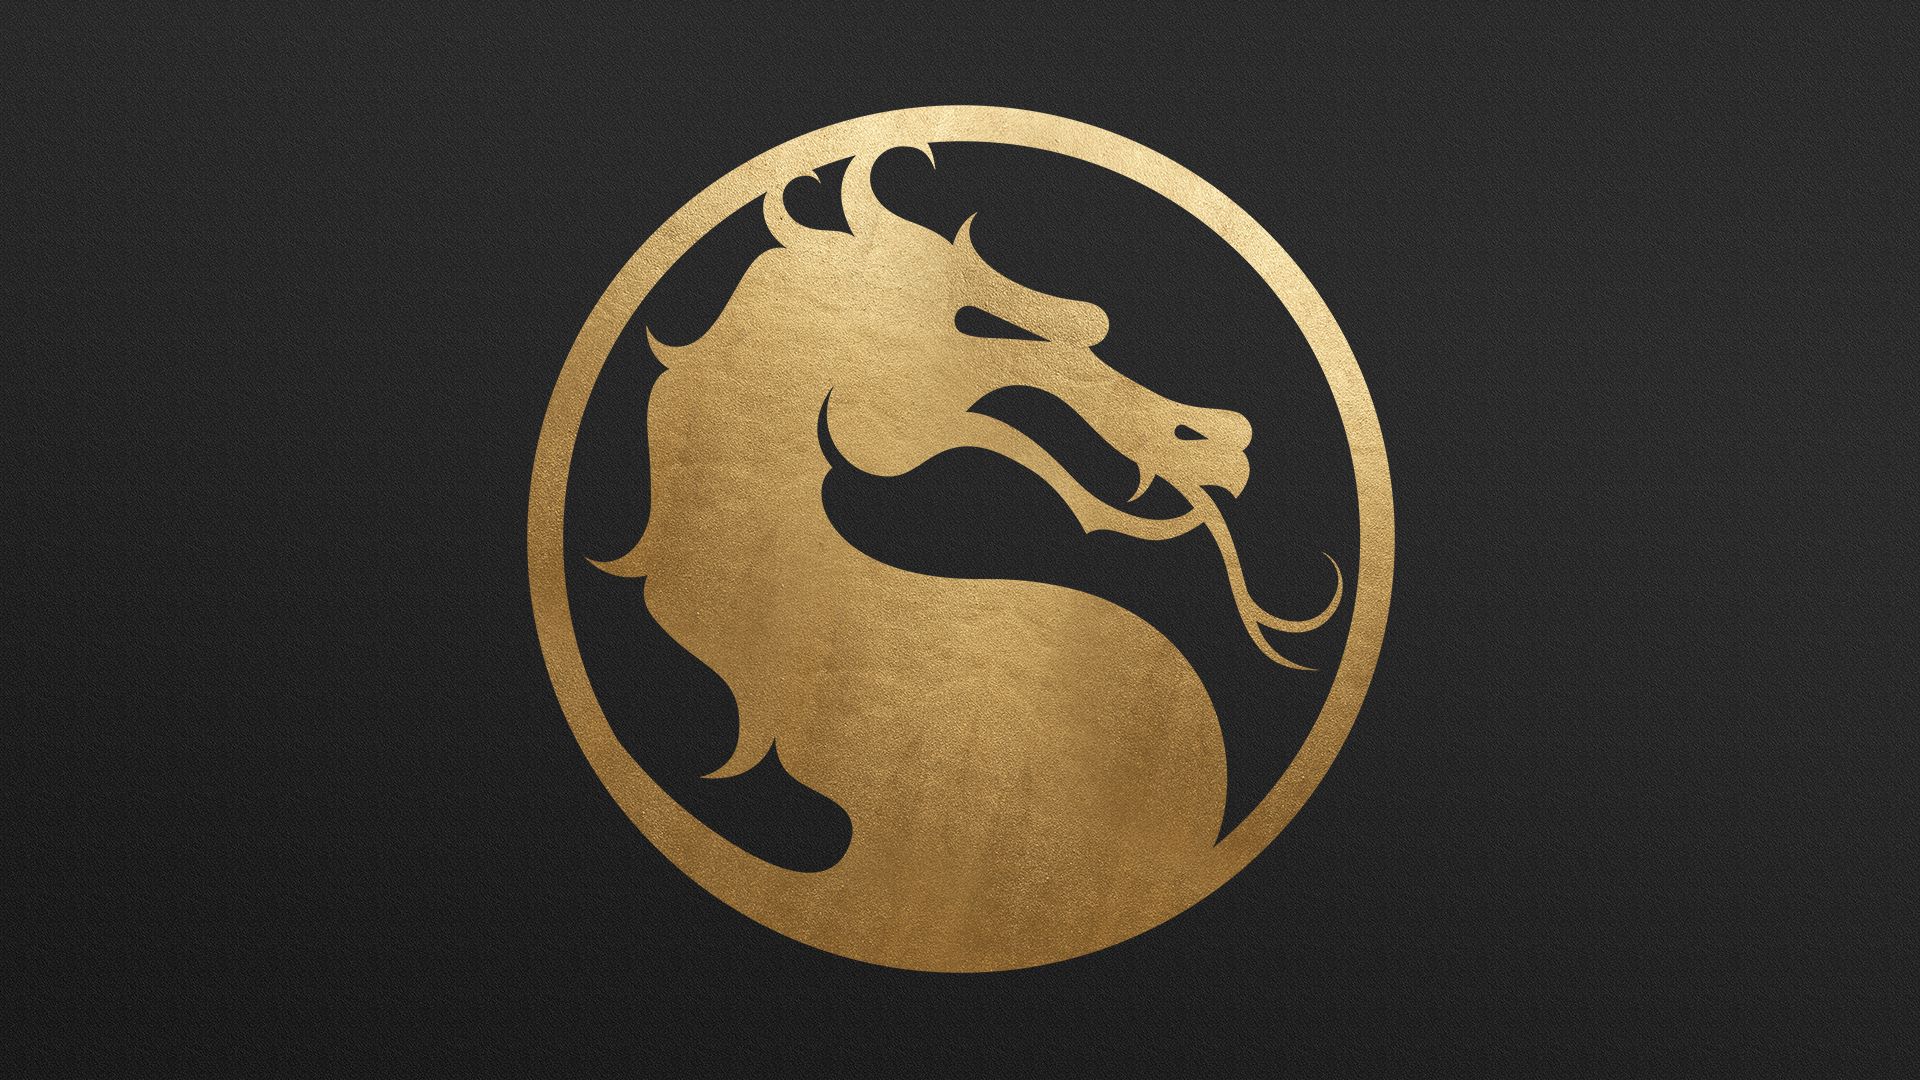 Mortal Kombat 11 News: Beta begins on March 28th